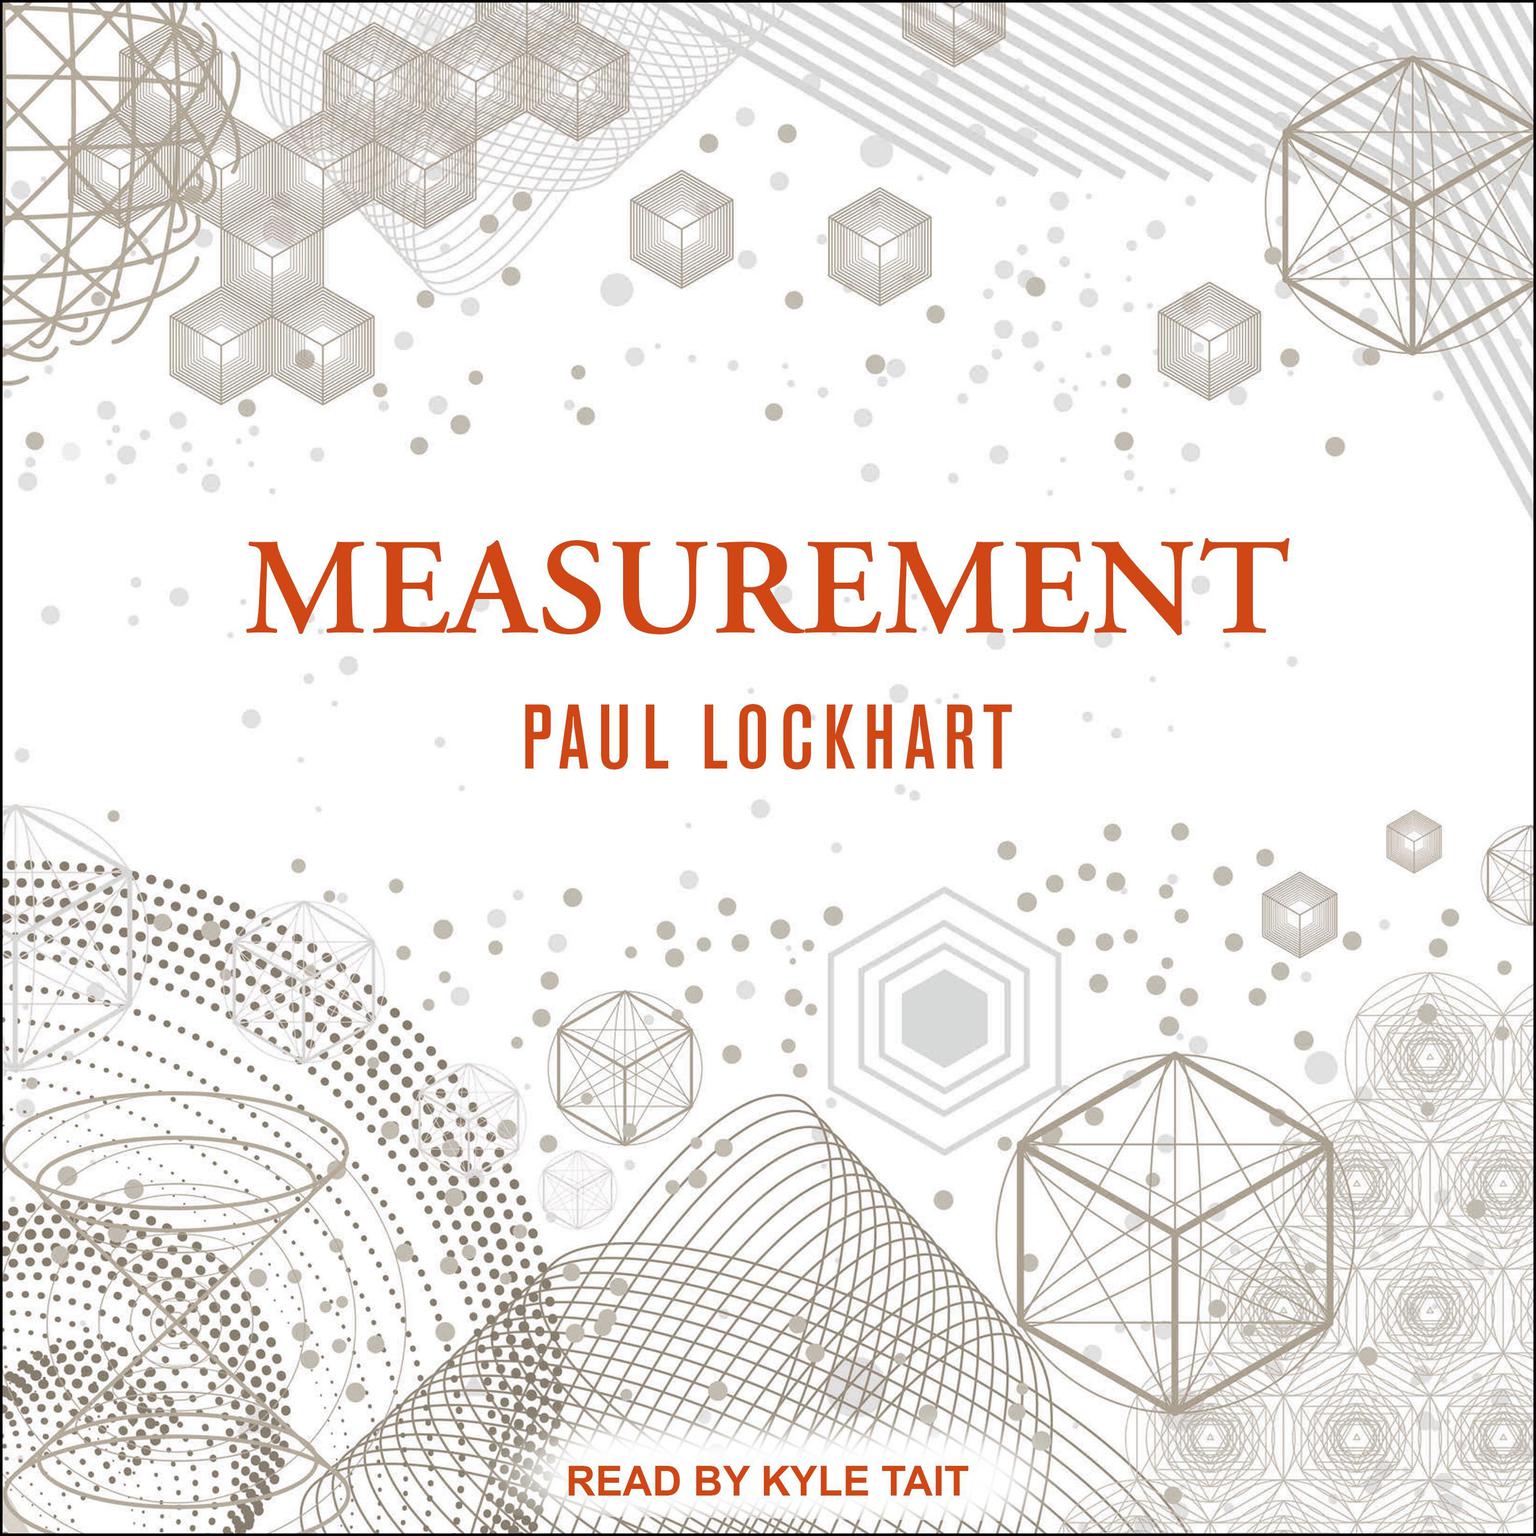 Measurement Audiobook, by Paul Lockhart